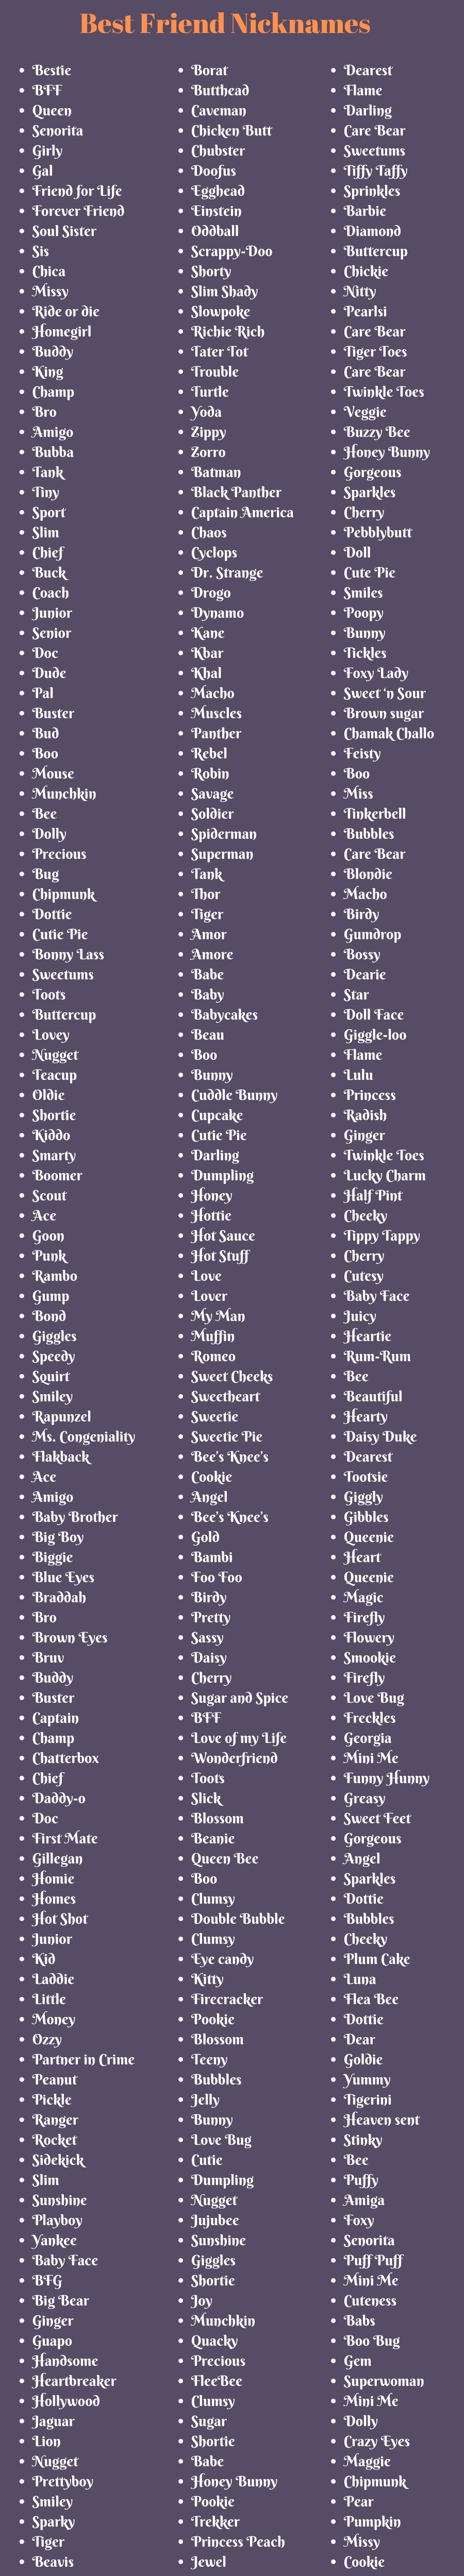 Nicknames for loved ones